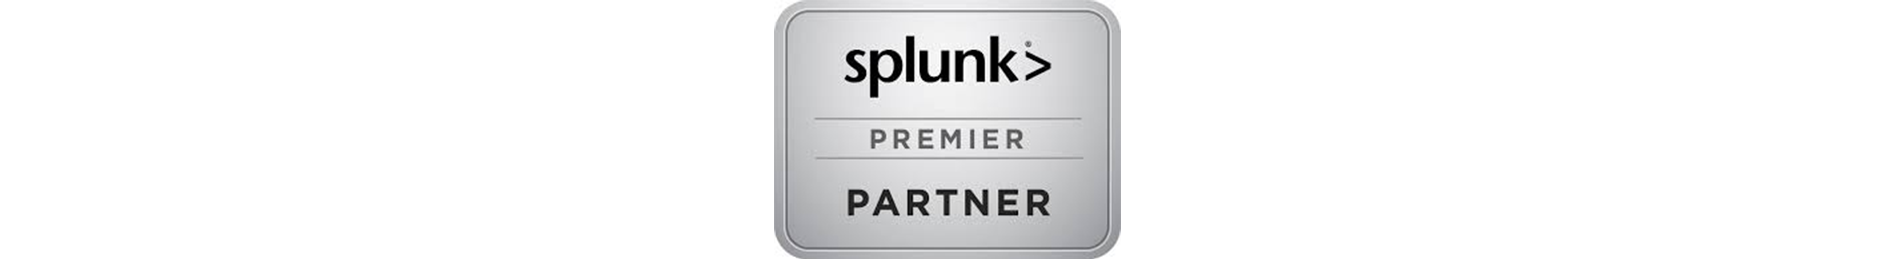 Splunk Distributed Search. Или как построить Indexer кластер на Splunk? - 8